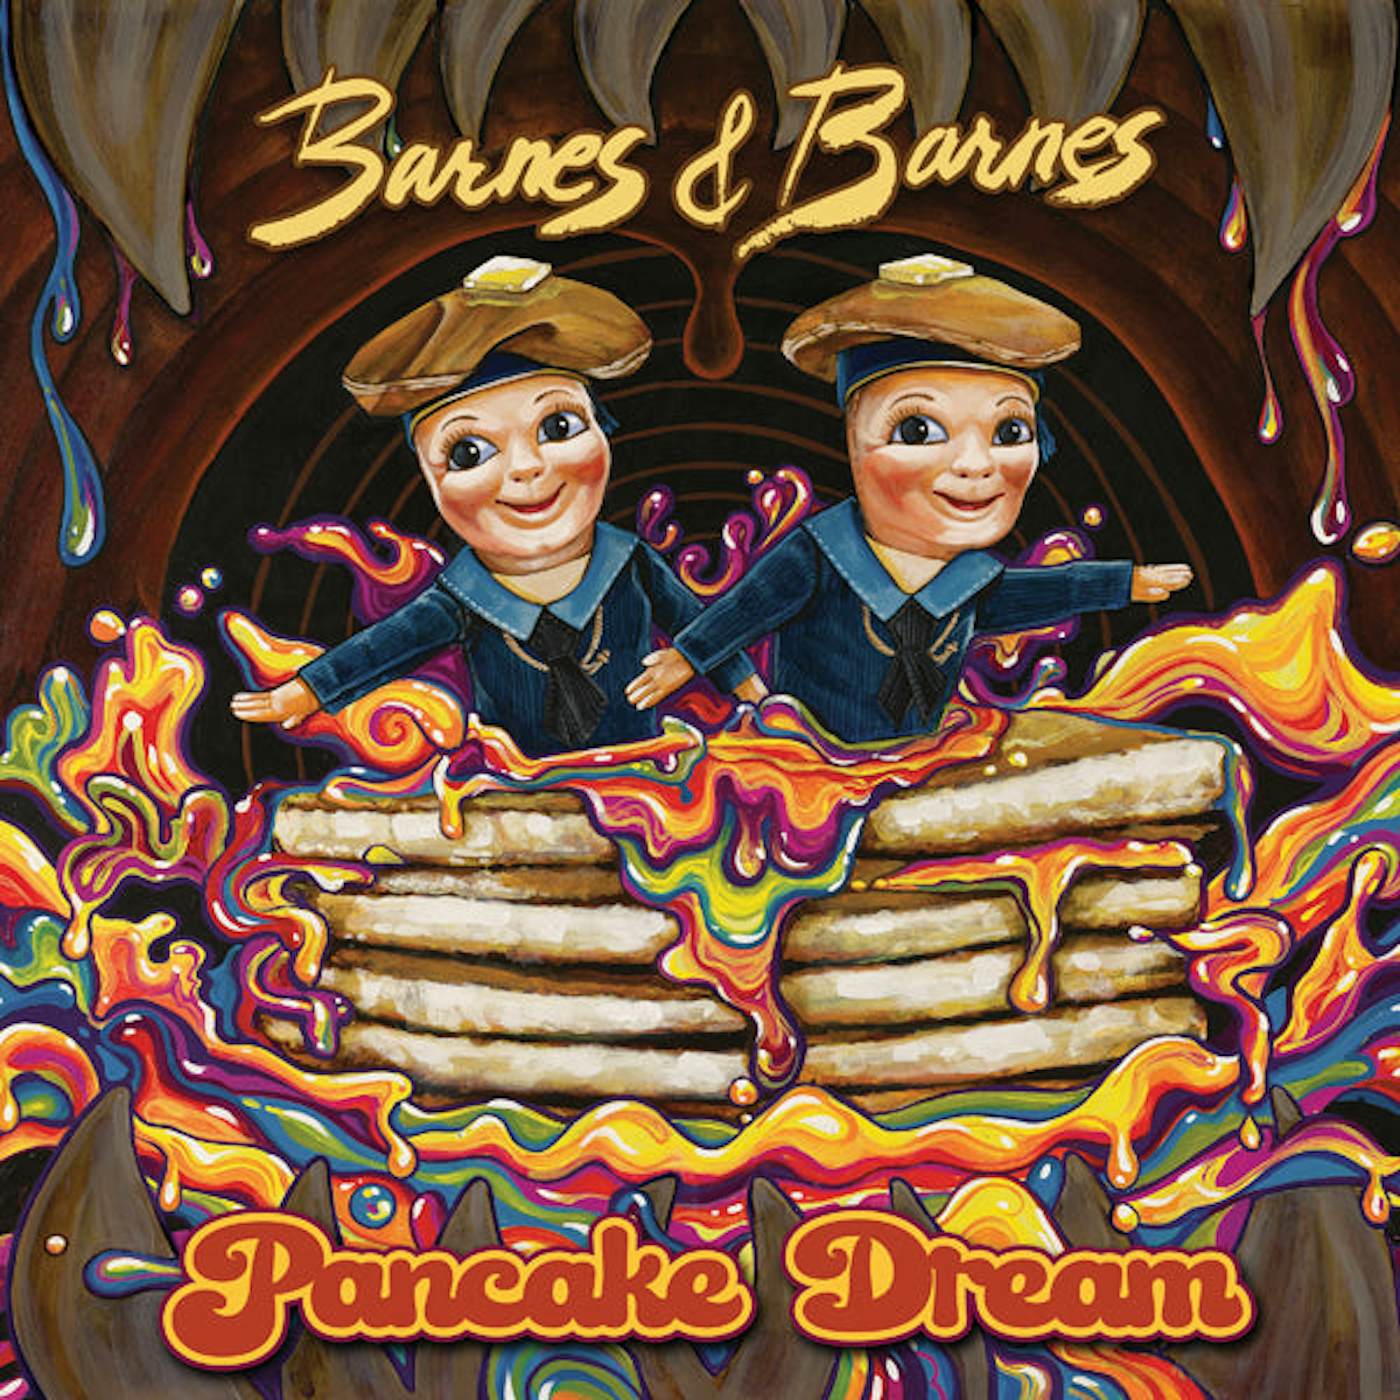 Barnes & Barnes LP - Pancake Dream (2lp) (Vinyl)